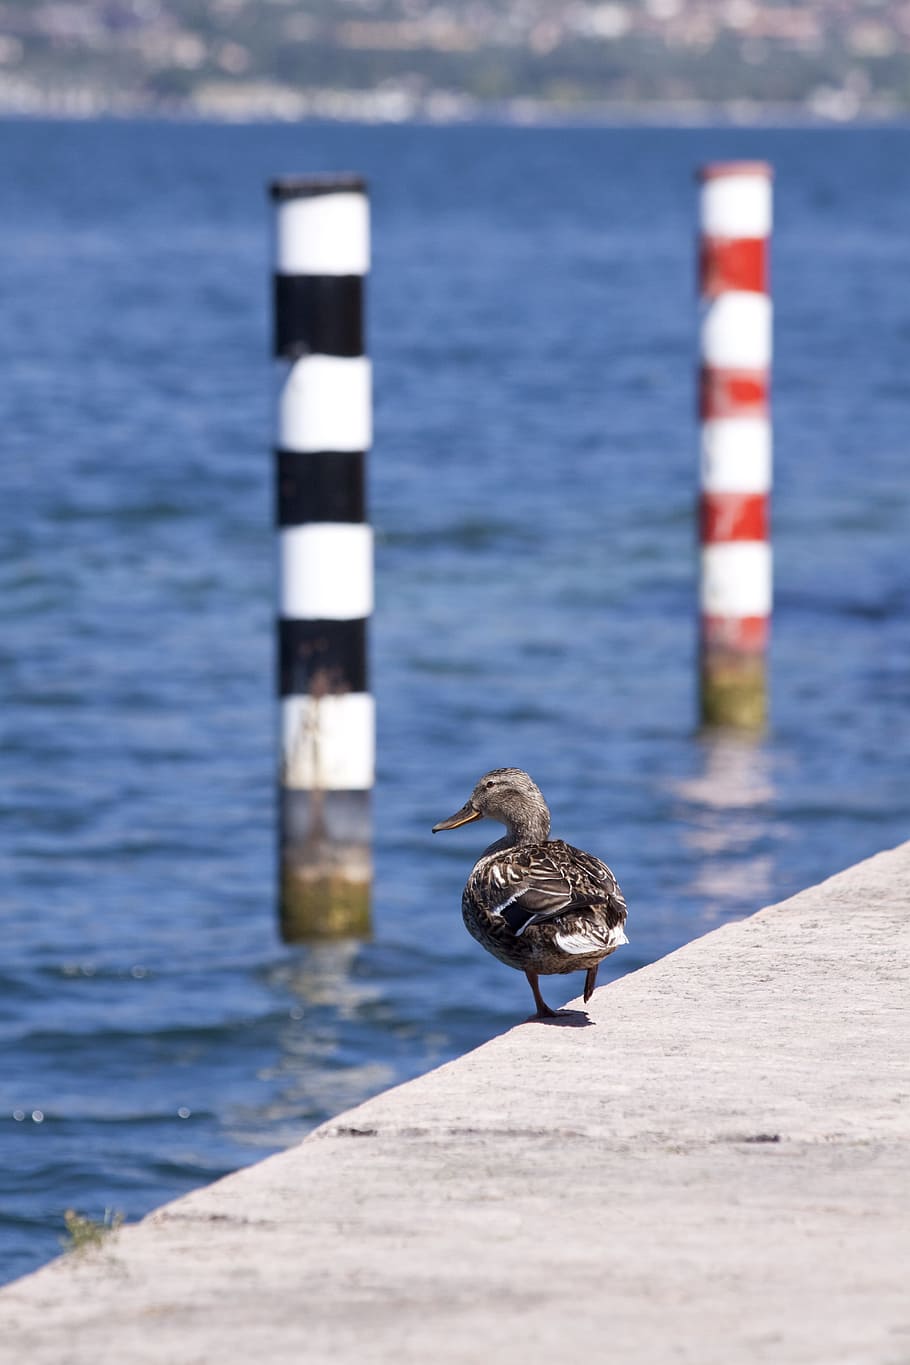 Mallard, Female, Bird, Ducks, swimming duck, bank, promenade, lake, pier, piles